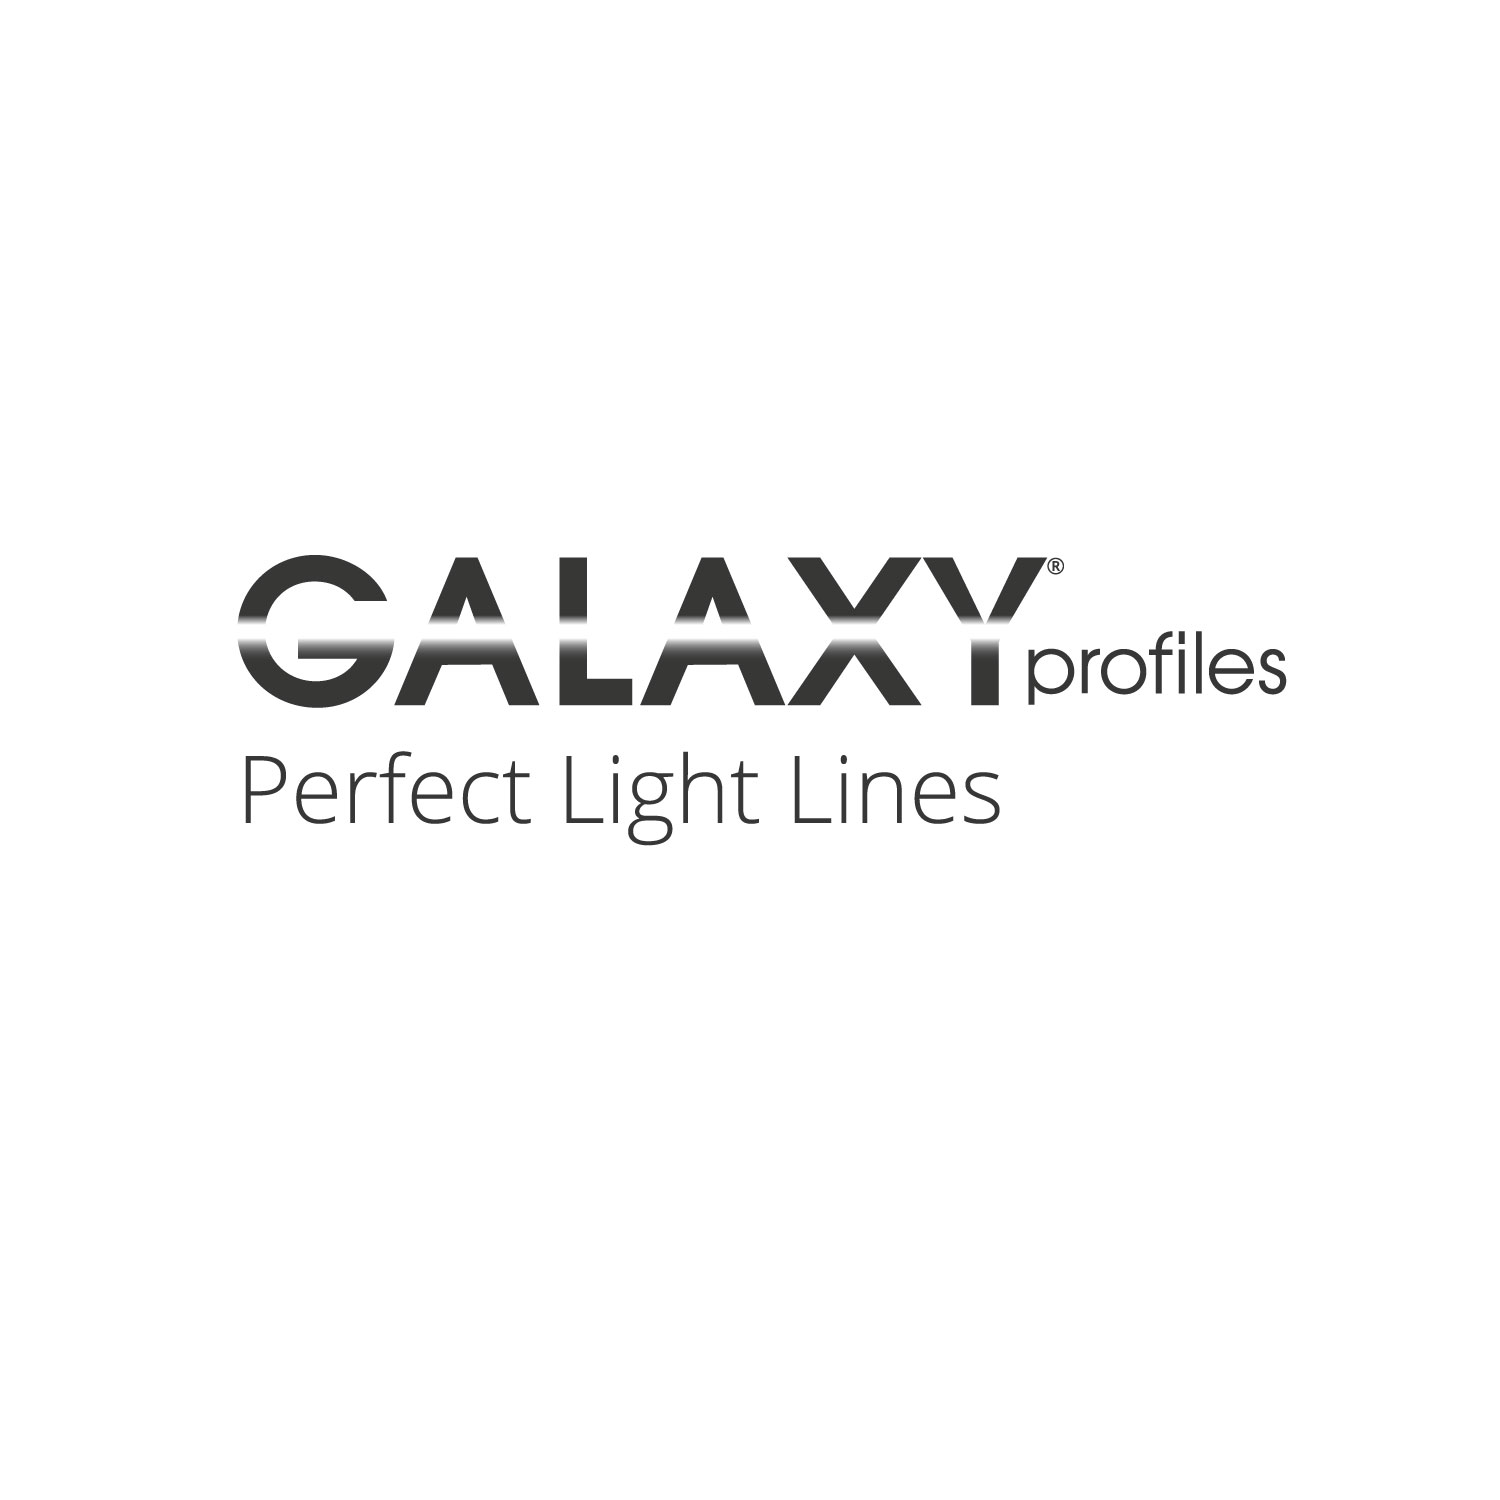 GALAXY® profiles - Catalog 2022/23 - English - German